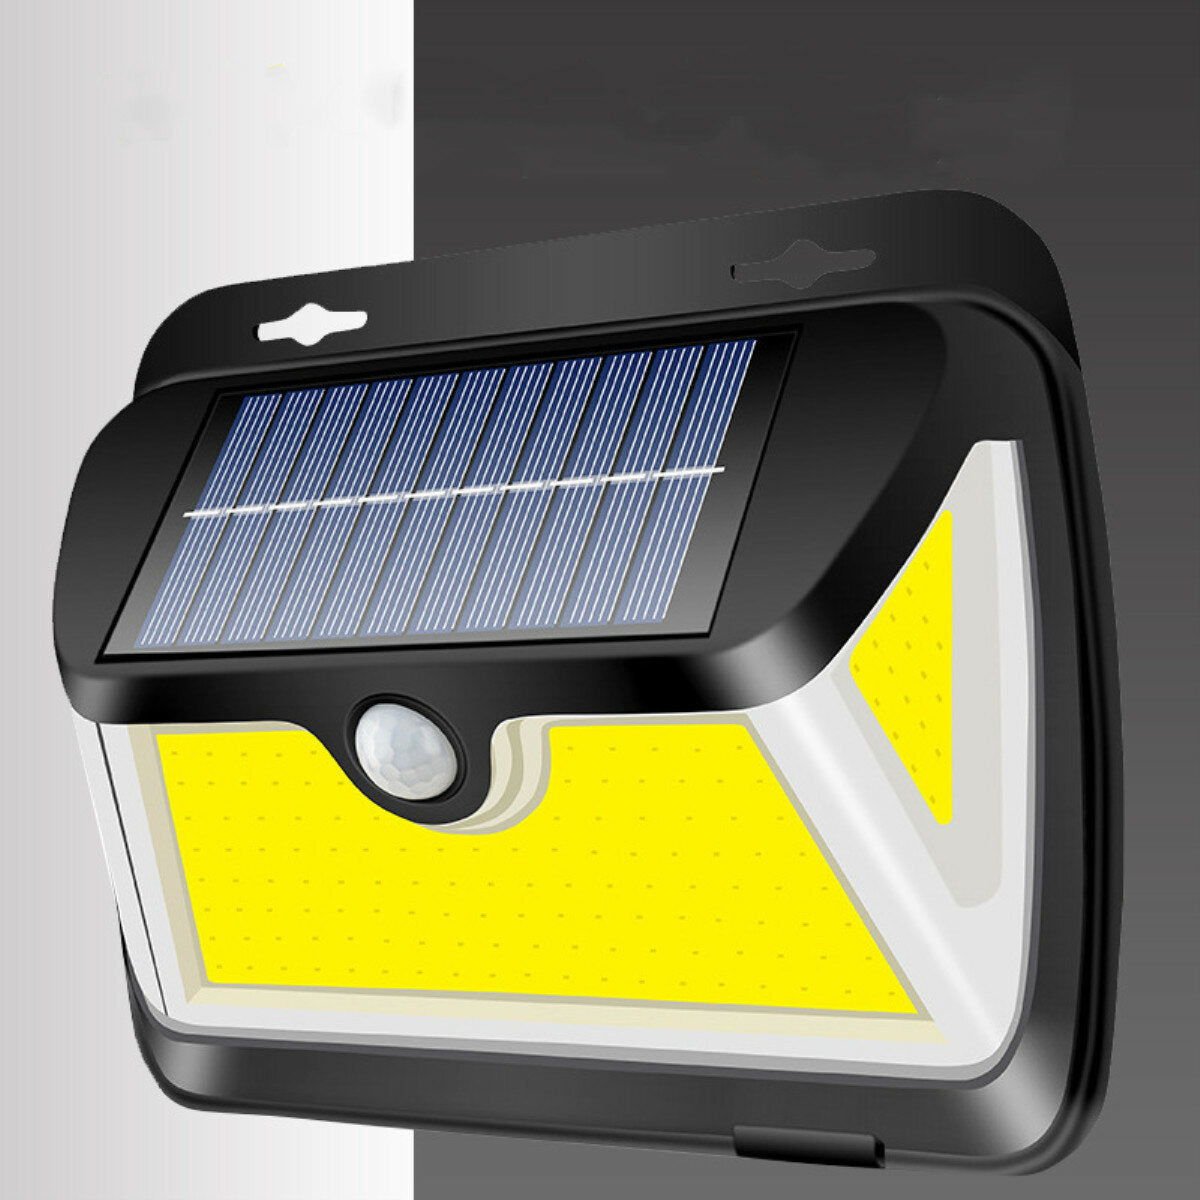 163 COB LED Solar Light Motion Sensor PIR Light Waterproof Safety Outdoor Garden Household Accessories